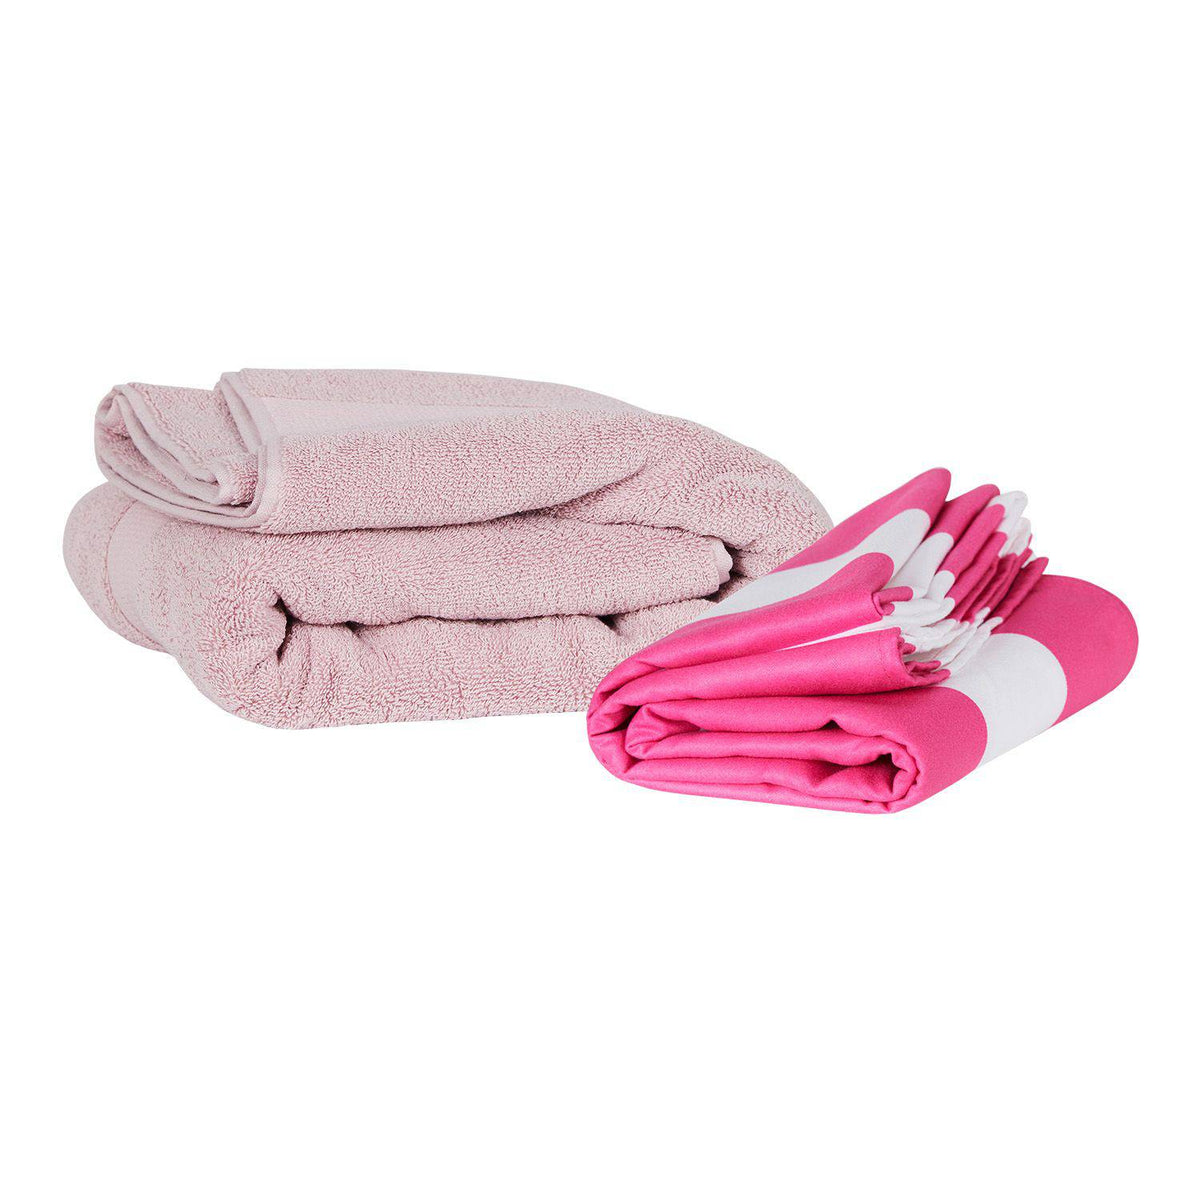 Cabana Stripe Phi Phi Pink Beach Towel - 2 sizes - The Preppy Bunny